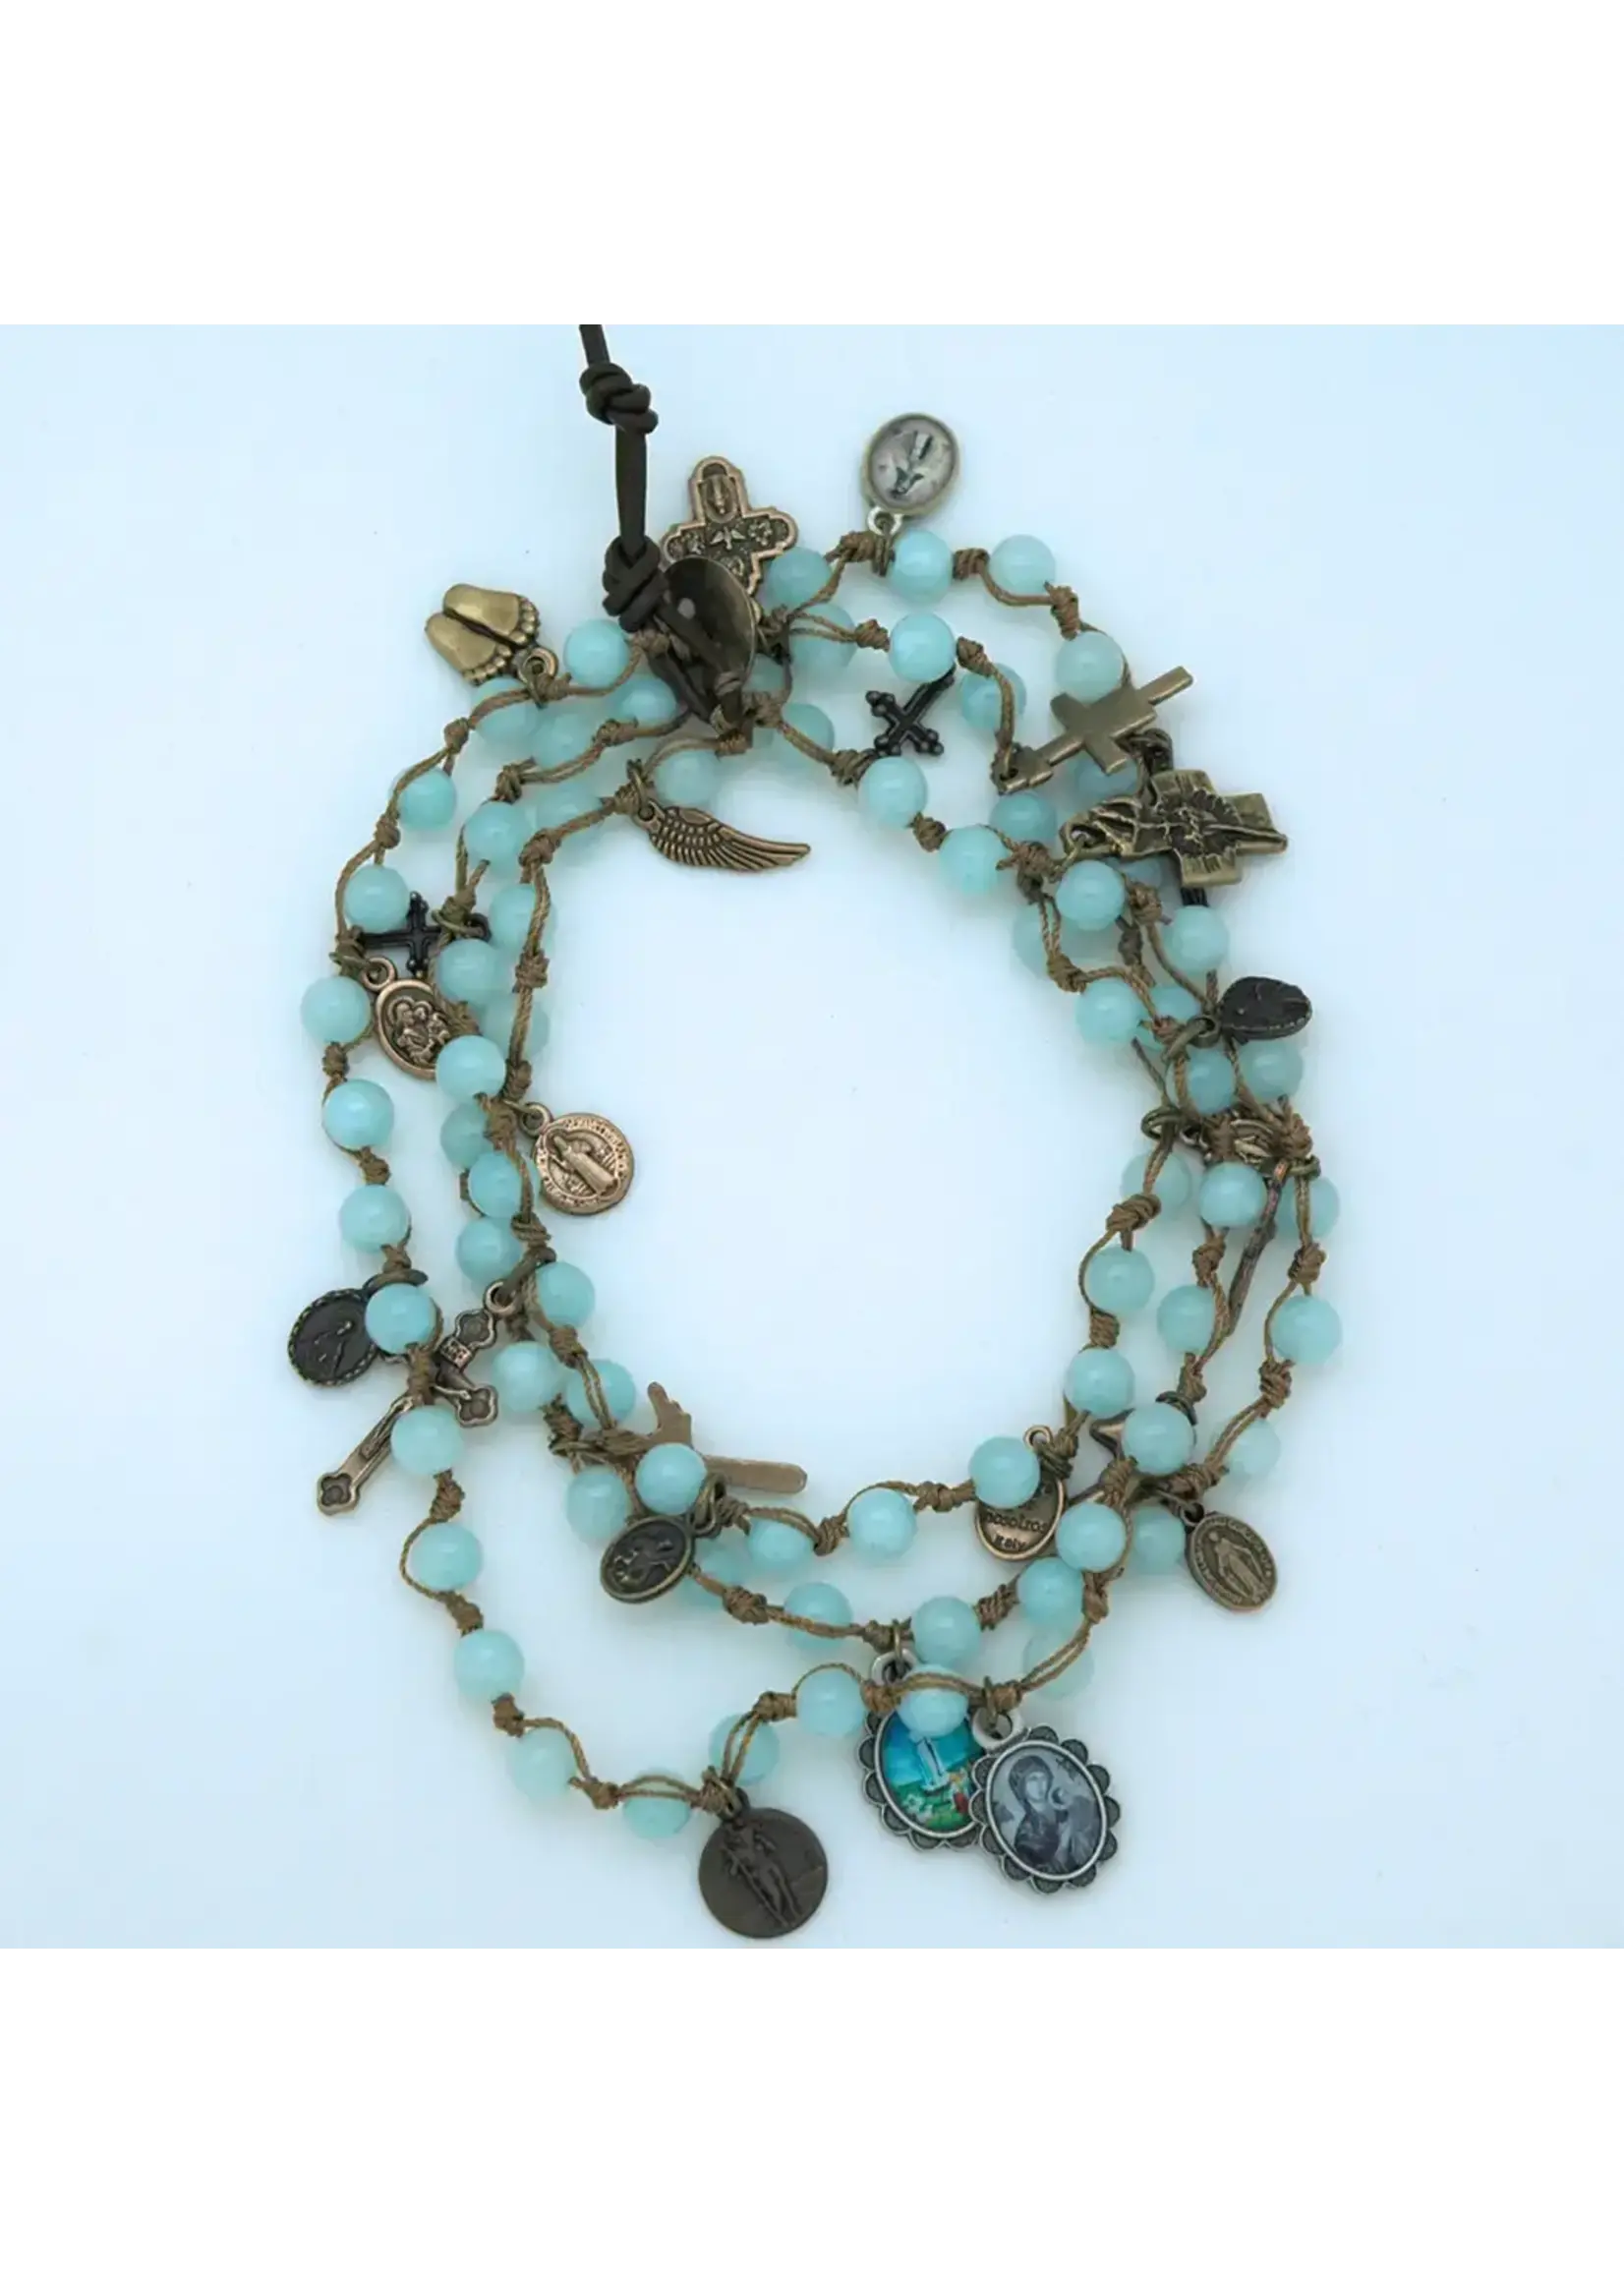 Aquamarine gemstone + medals wrap bracelet/necklace